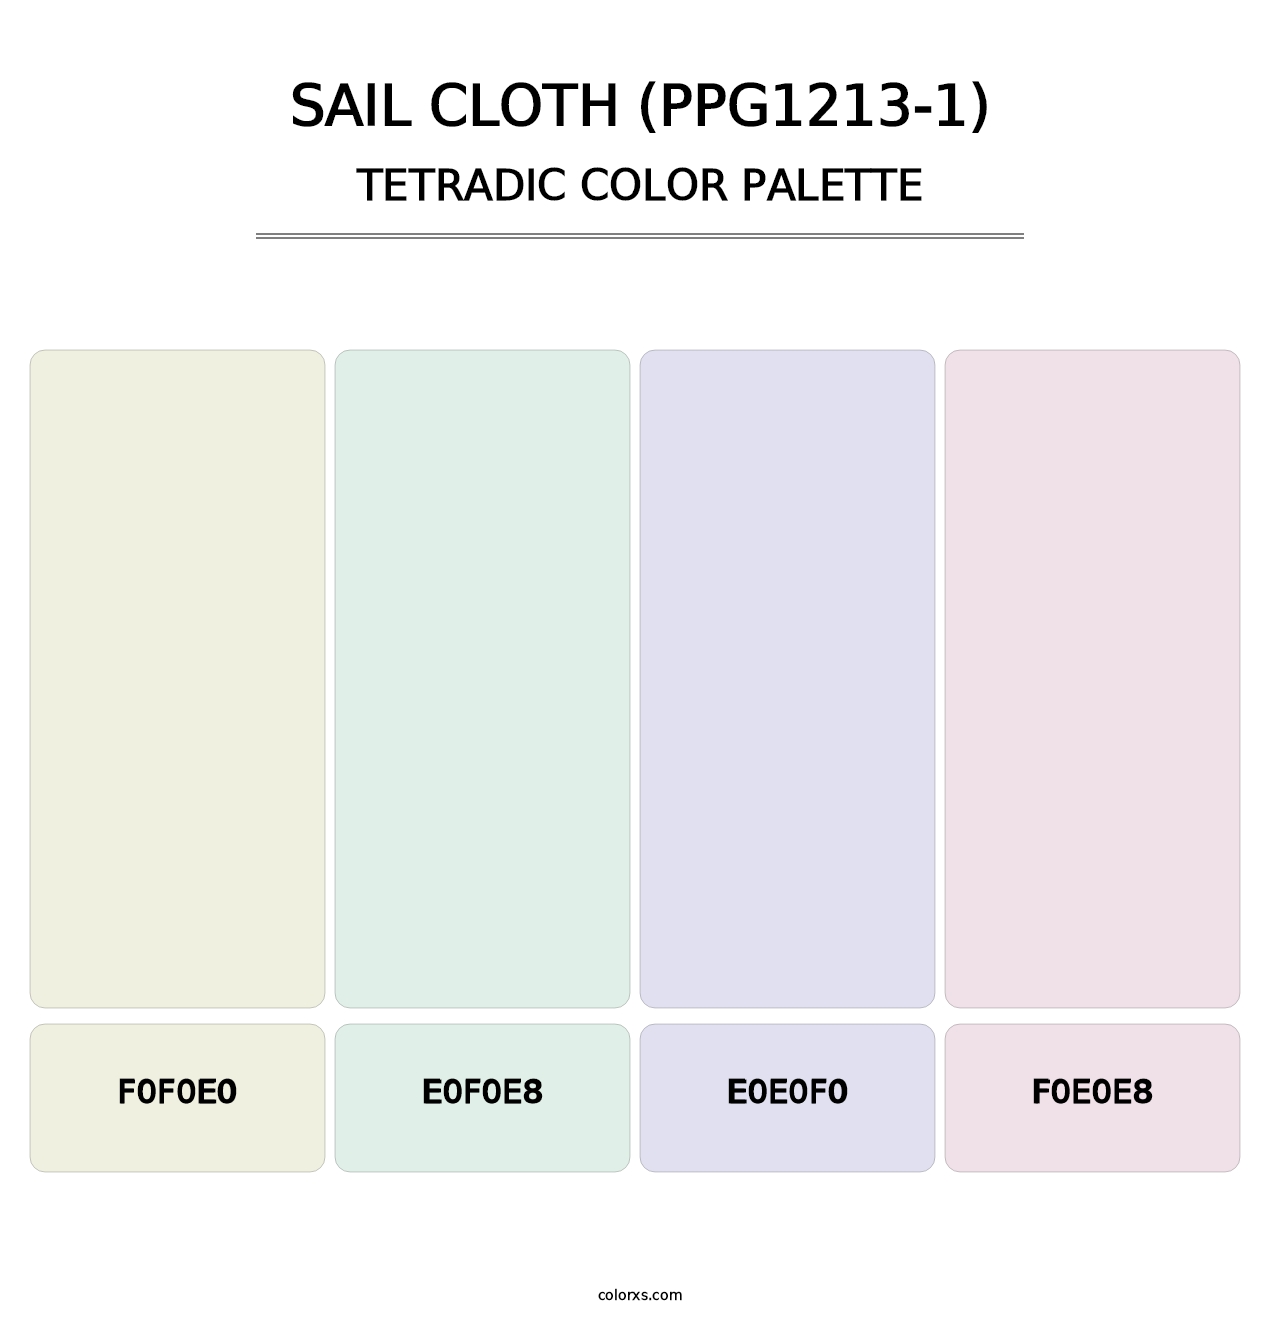 Sail Cloth (PPG1213-1) - Tetradic Color Palette